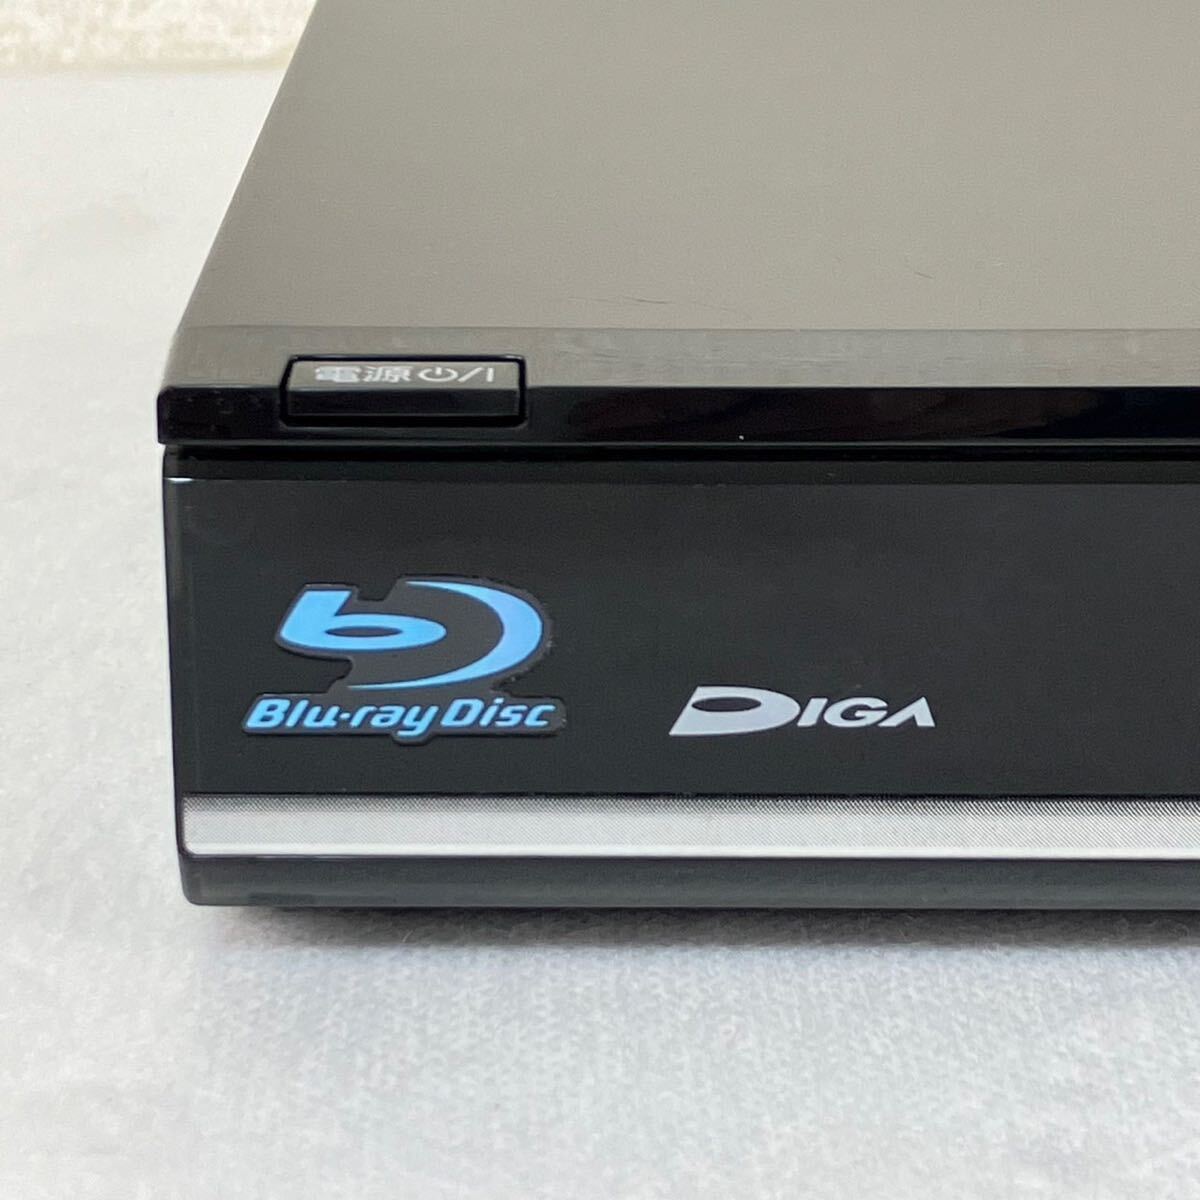 Panasonic パナソニック DMR-BWT510ブルーレイディスクレコーダー 2011年製 DIGA HDD/BDレコーダー 2番組 3D対応機器 リモコン BDIR6_画像3